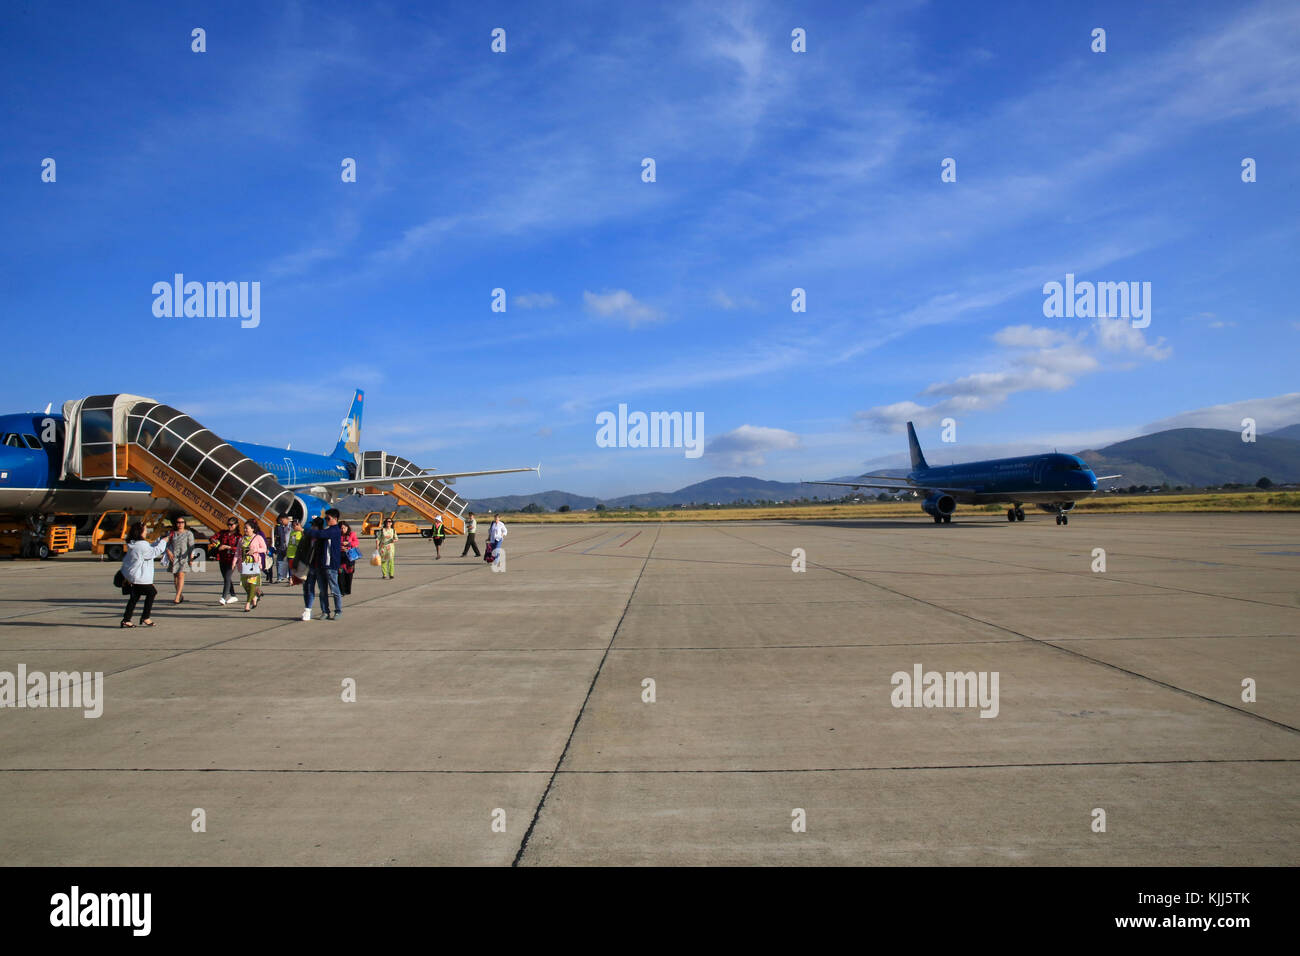 Aeropuerto de Dalat. Vietnam Airlines. Dalat. Vietnam. Foto de stock